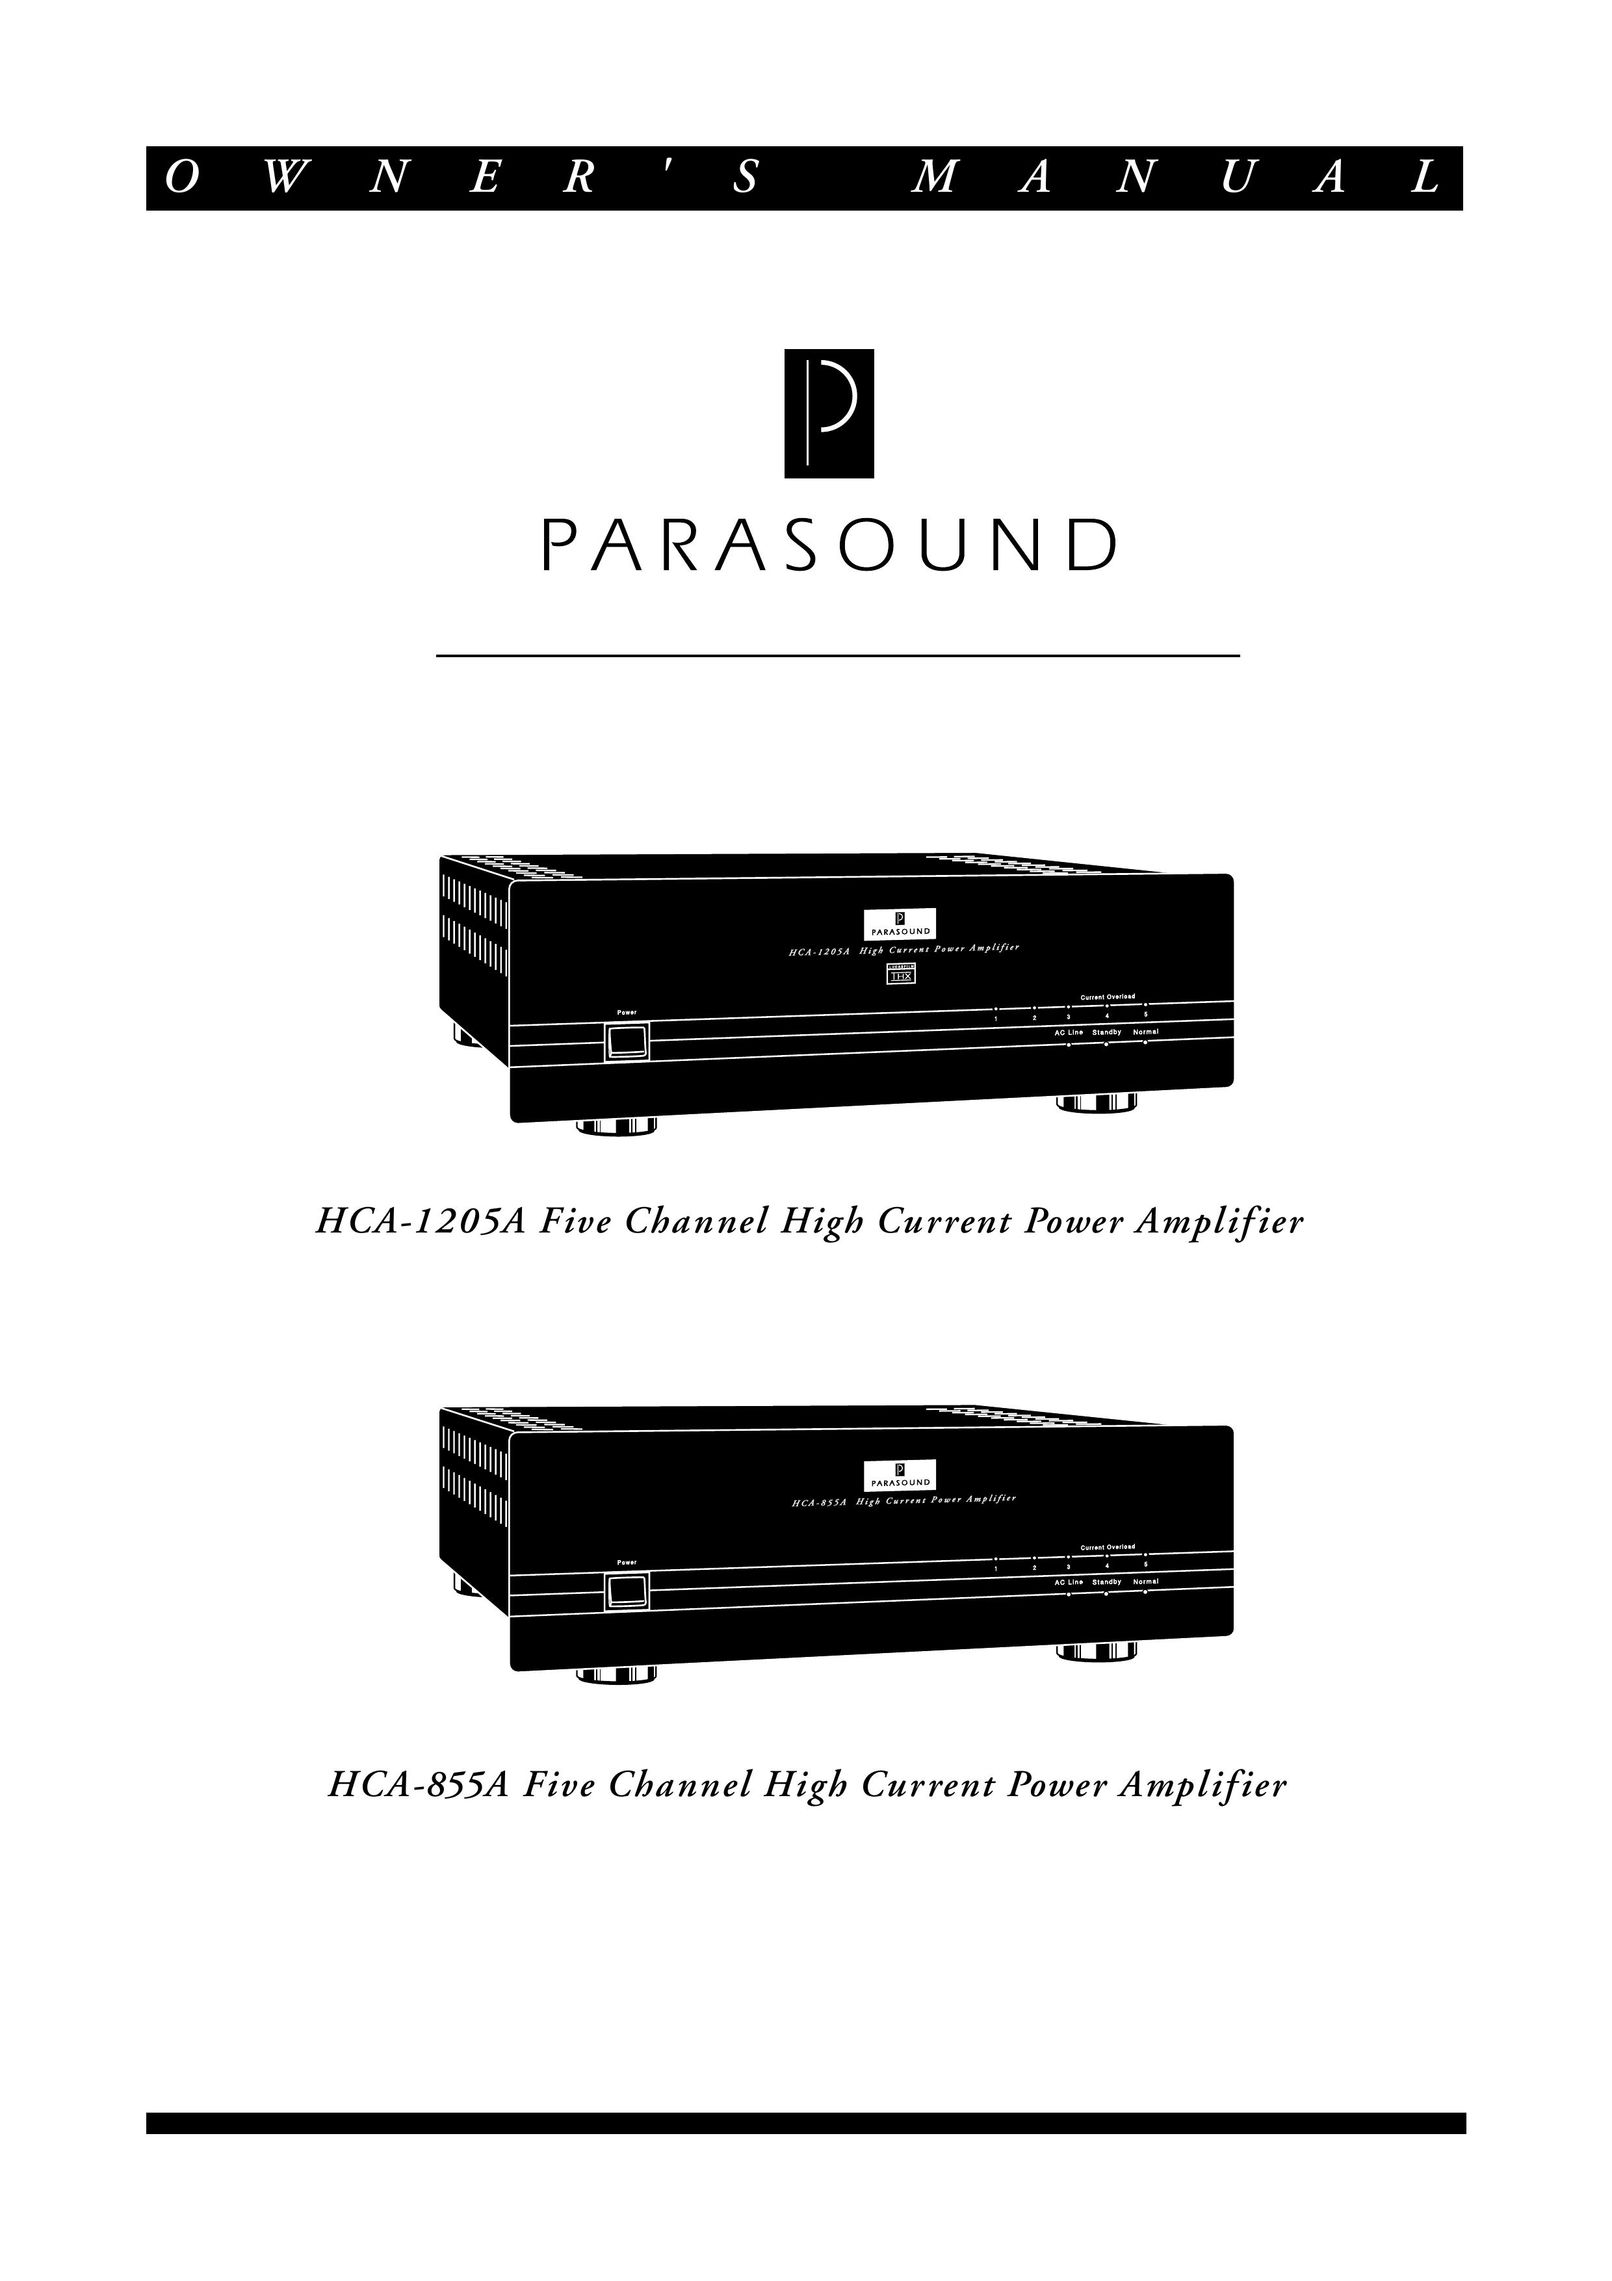 Parasound HCA-1205A Stereo Amplifier User Manual